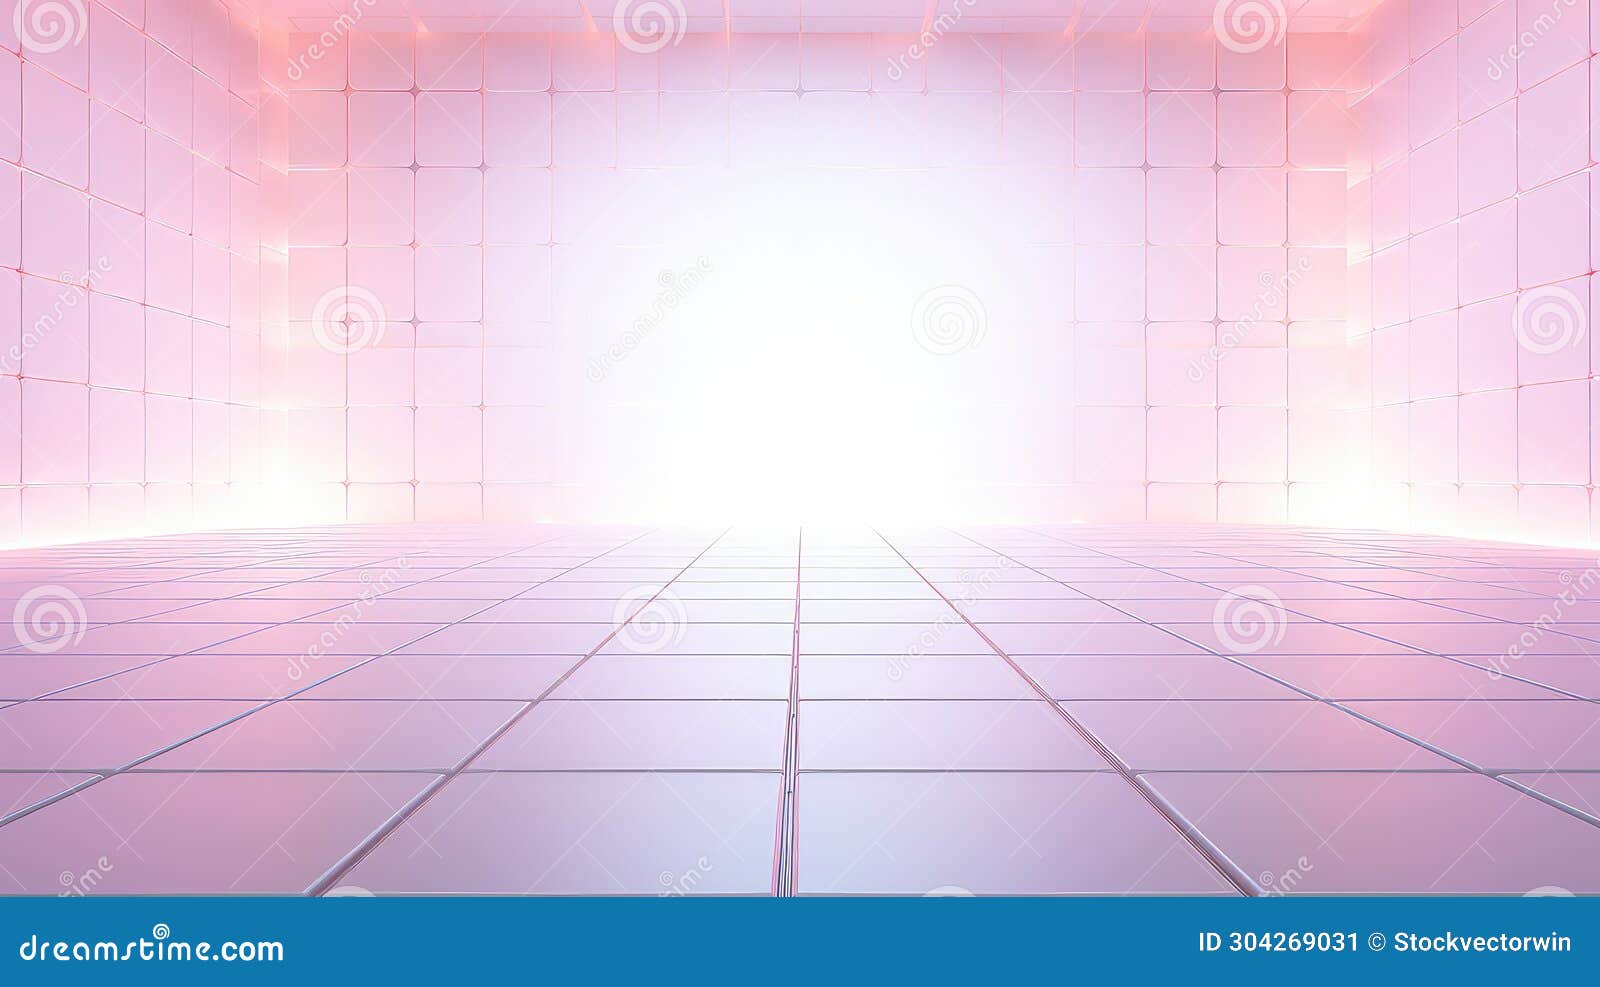 luminosity light tech background